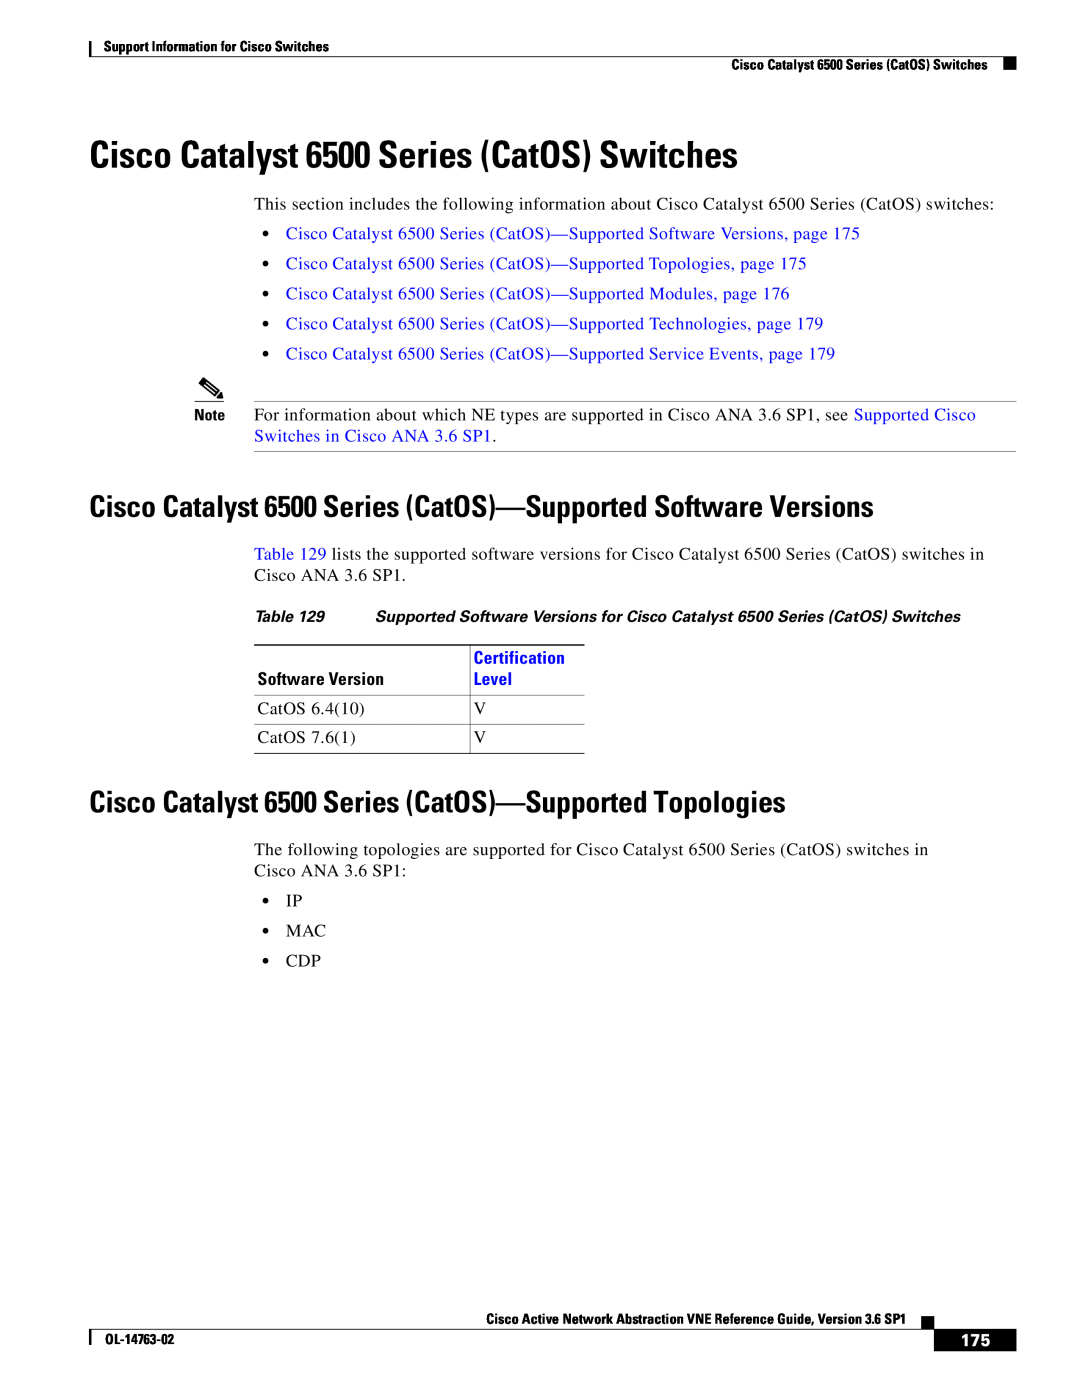 Cisco Systems OL-14763-02 Cisco Catalyst 6500 Series CatOS Switches, Cisco Catalyst 6500 Series CatOS-Supported Topologies 